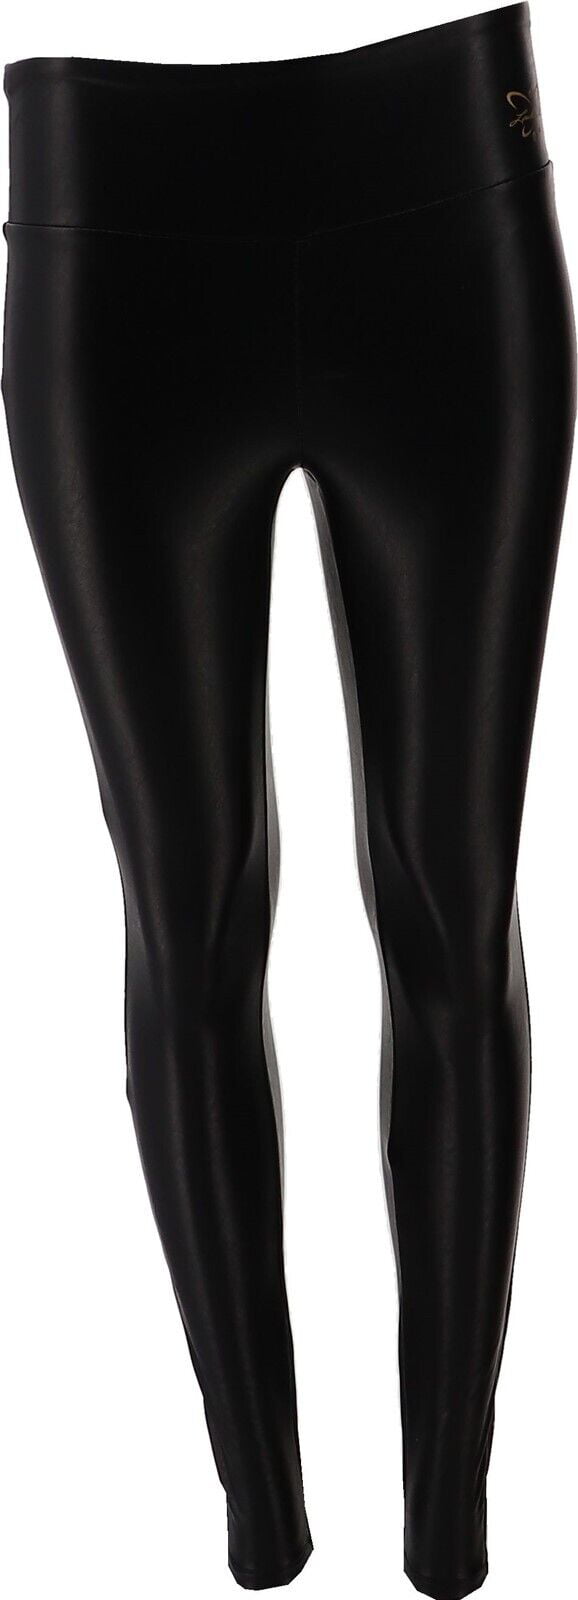 Laila Ali High-Rise Faux Leather Legging Women's 766-893 - Walmart.com